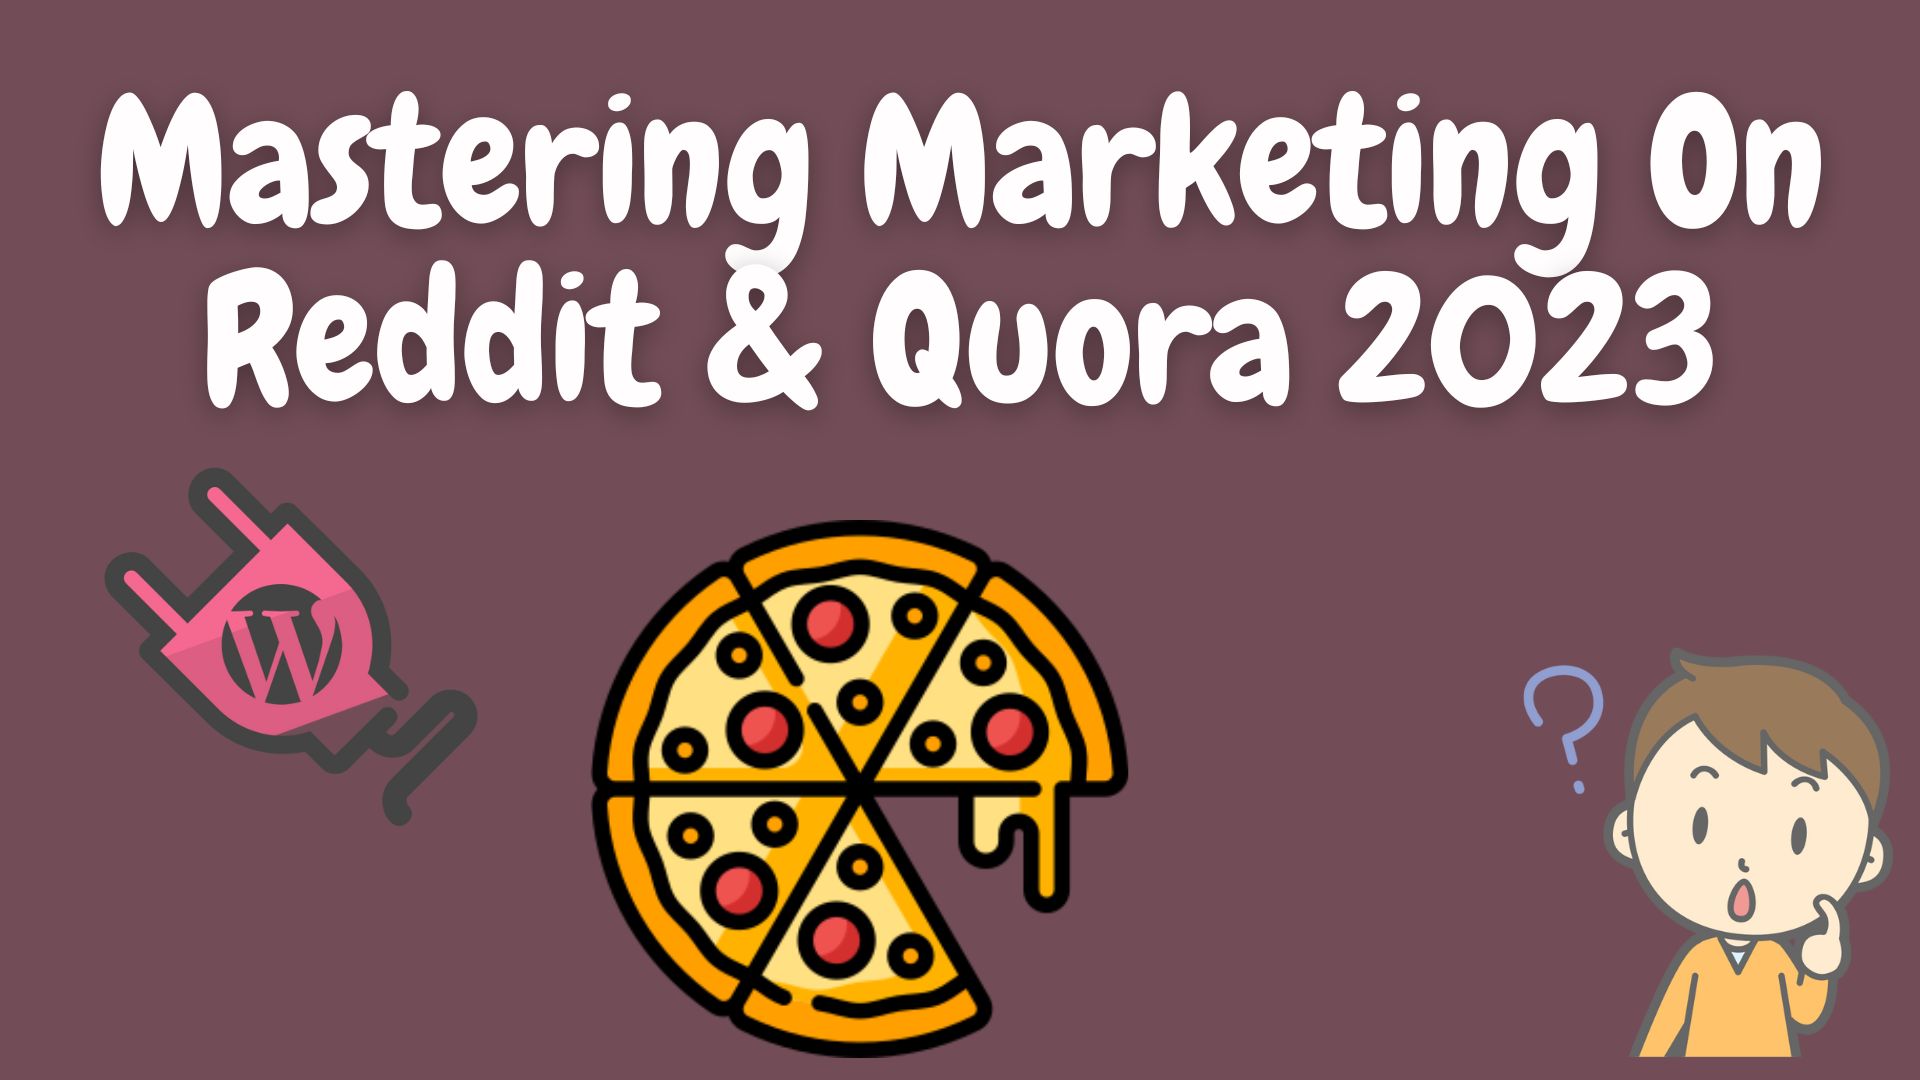 Mastering marketing on reddit & quora 2023